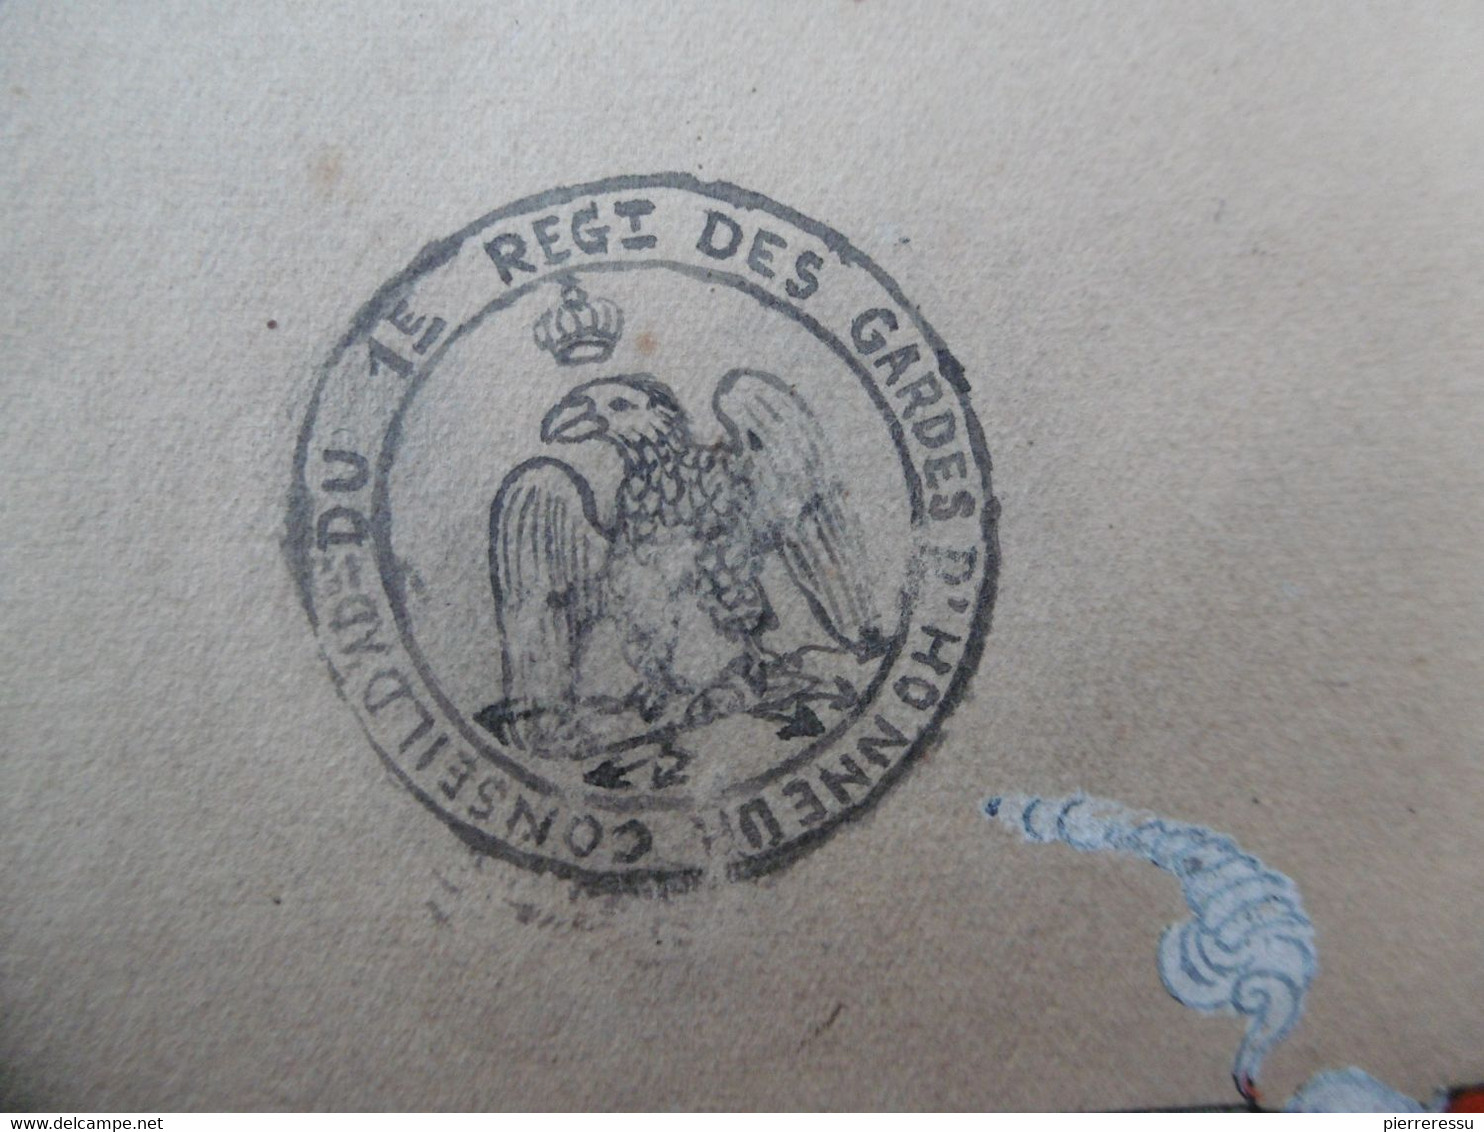 GARDE IMPERIALE GARDE D HONNEUR 1er REGIMENT DESSIN A LA GOUACHE 1813 BONAPARTE & JOSEPHINE - Documenten